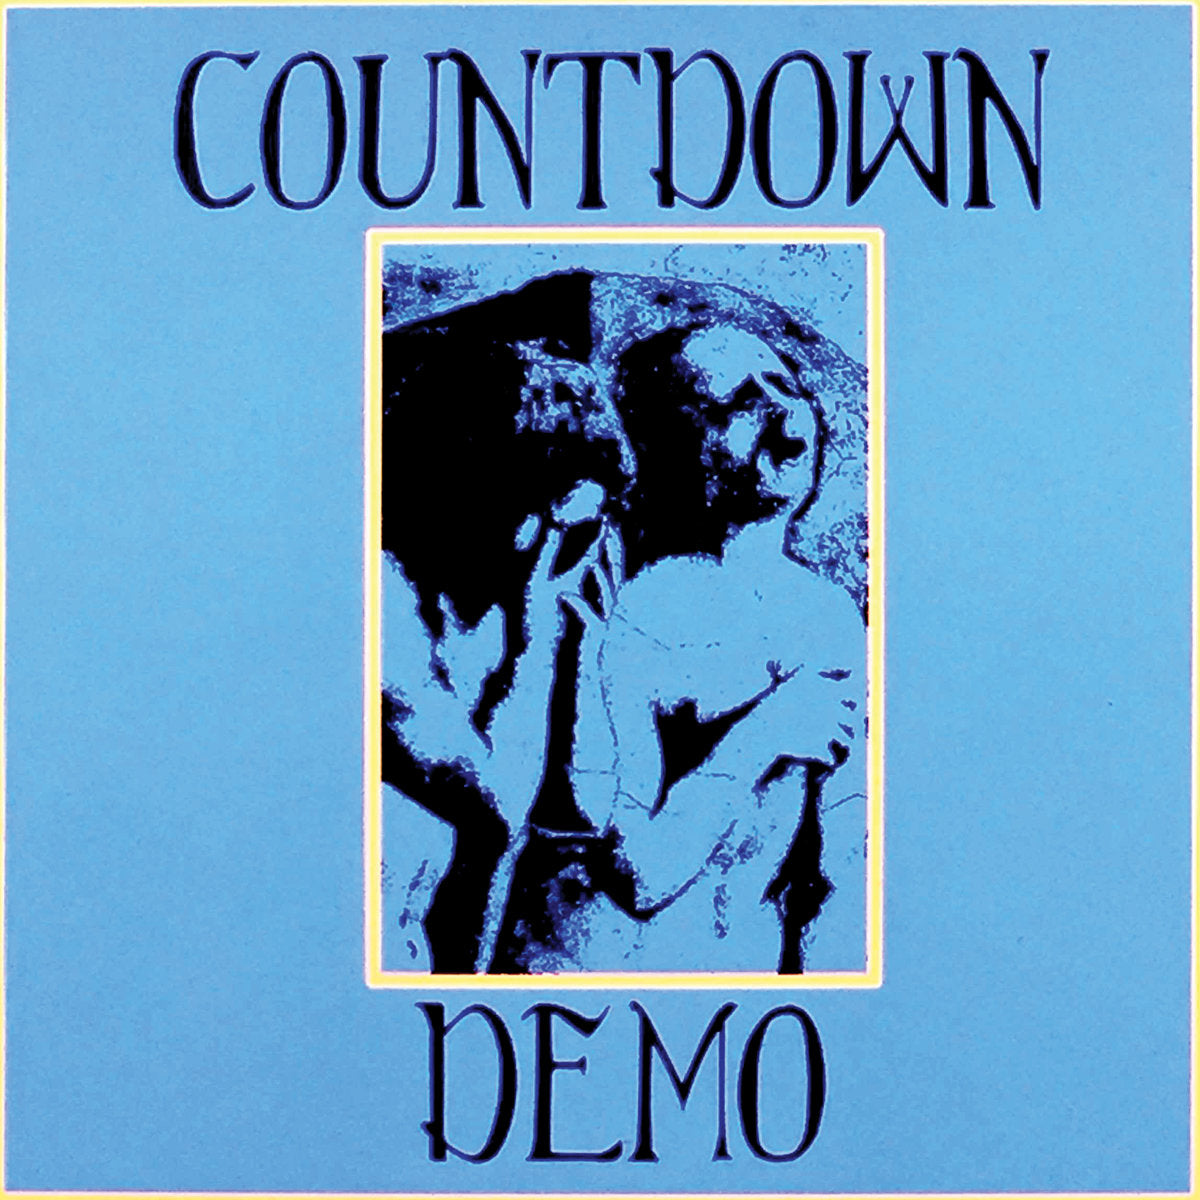 COUNTDOWN "Demo" 7"